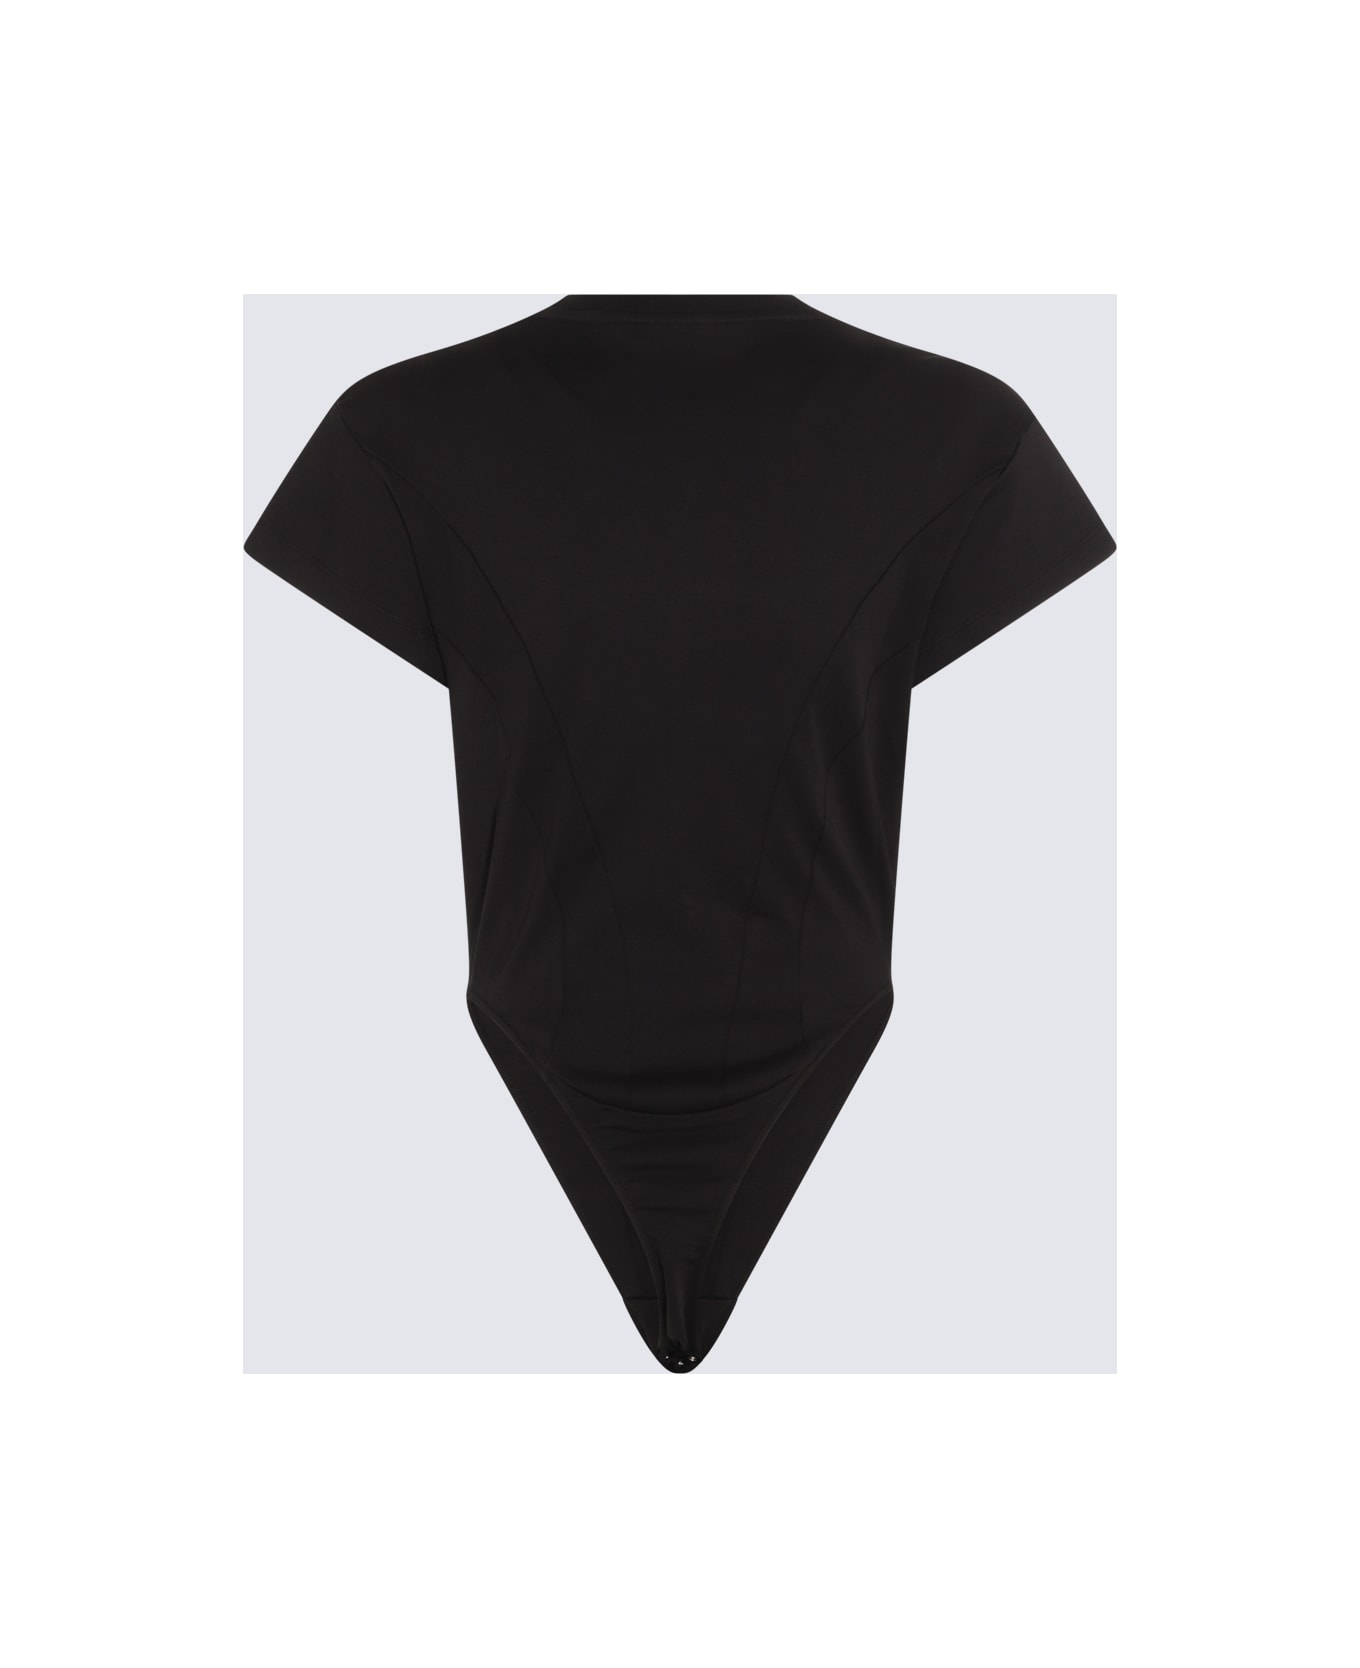 Mugler Black Jersey Zipped Bodysuit - Black